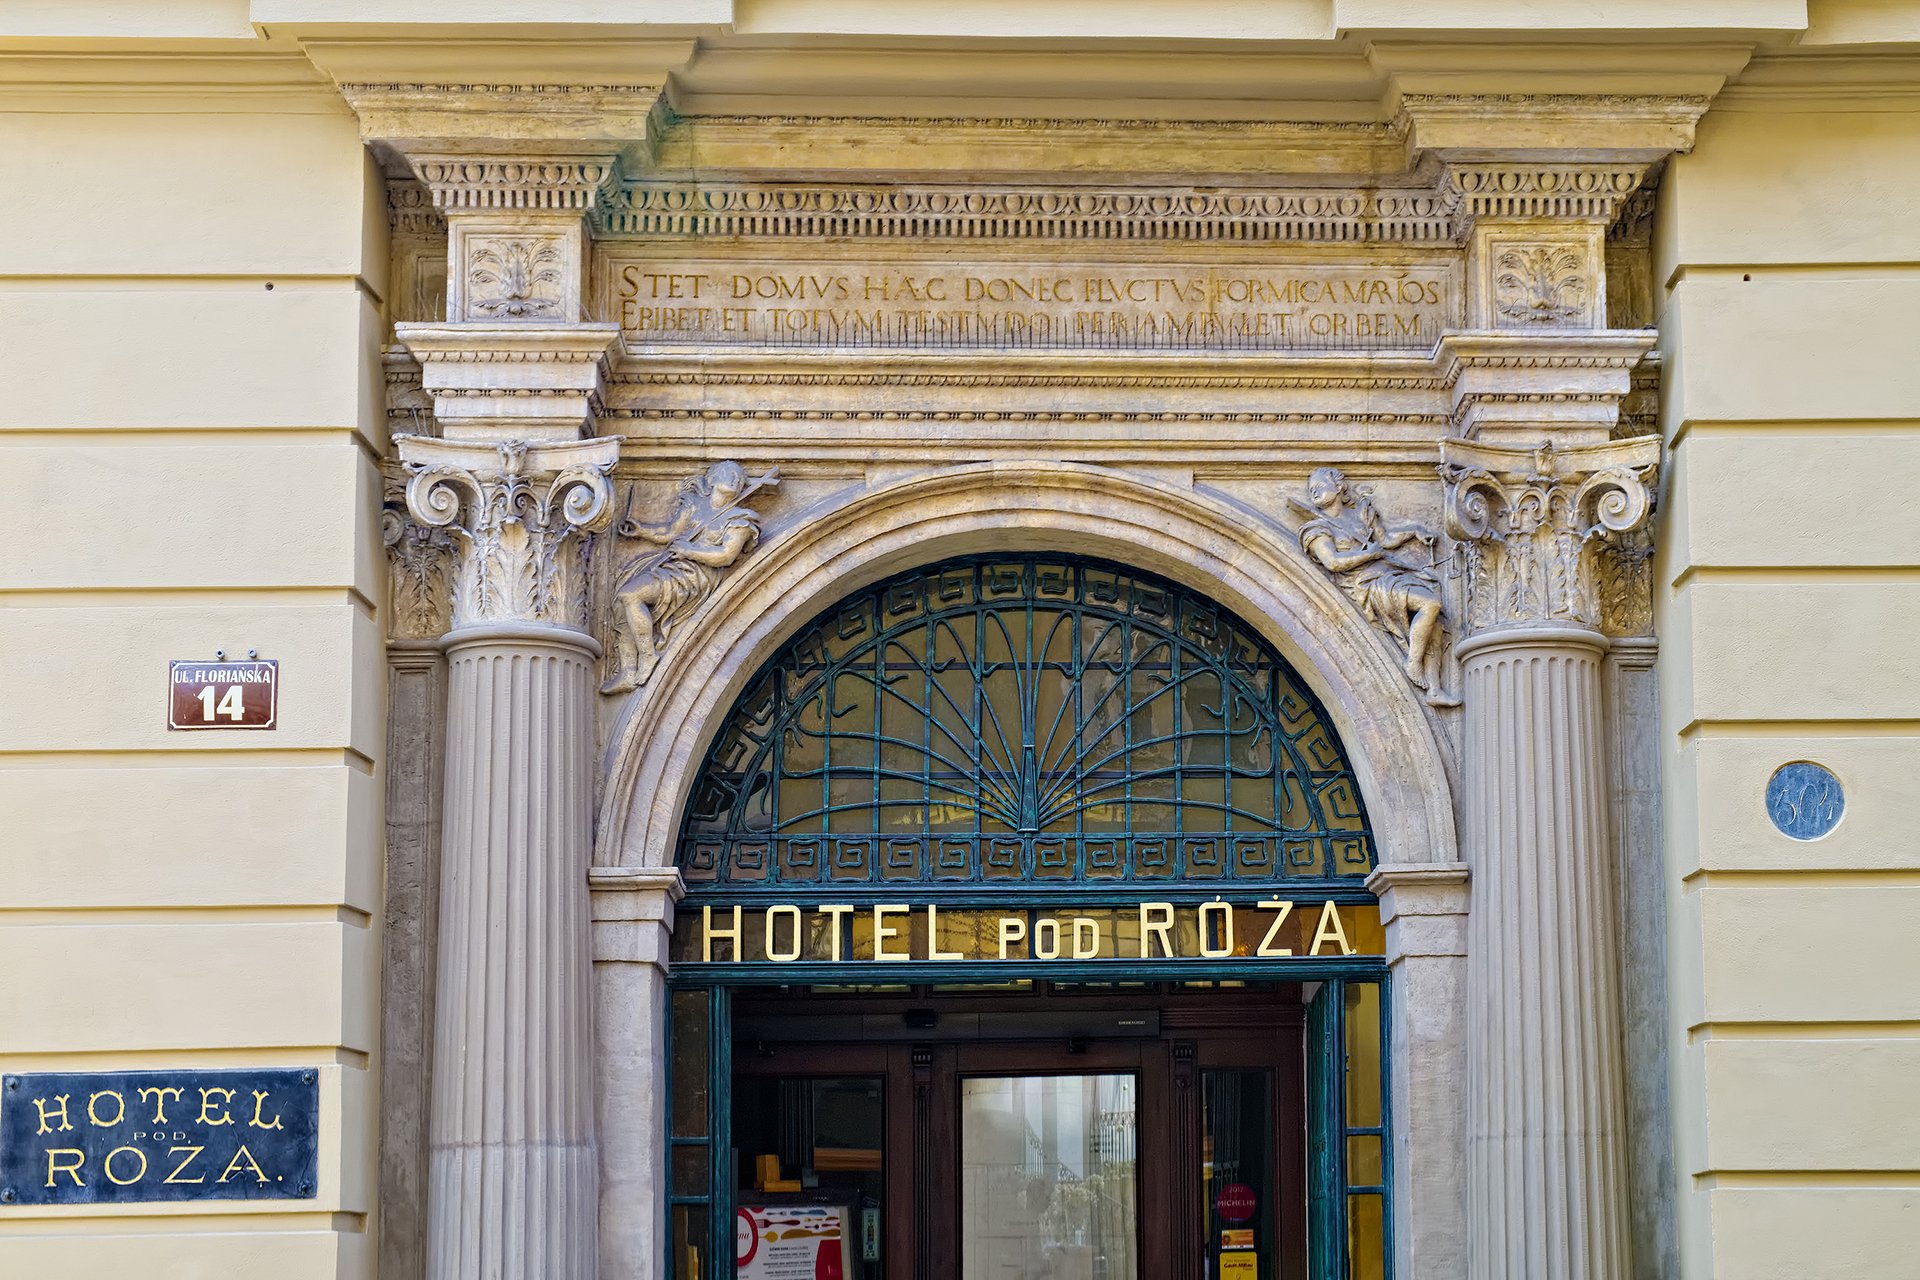 Hotel and restaurant Pod Roza.